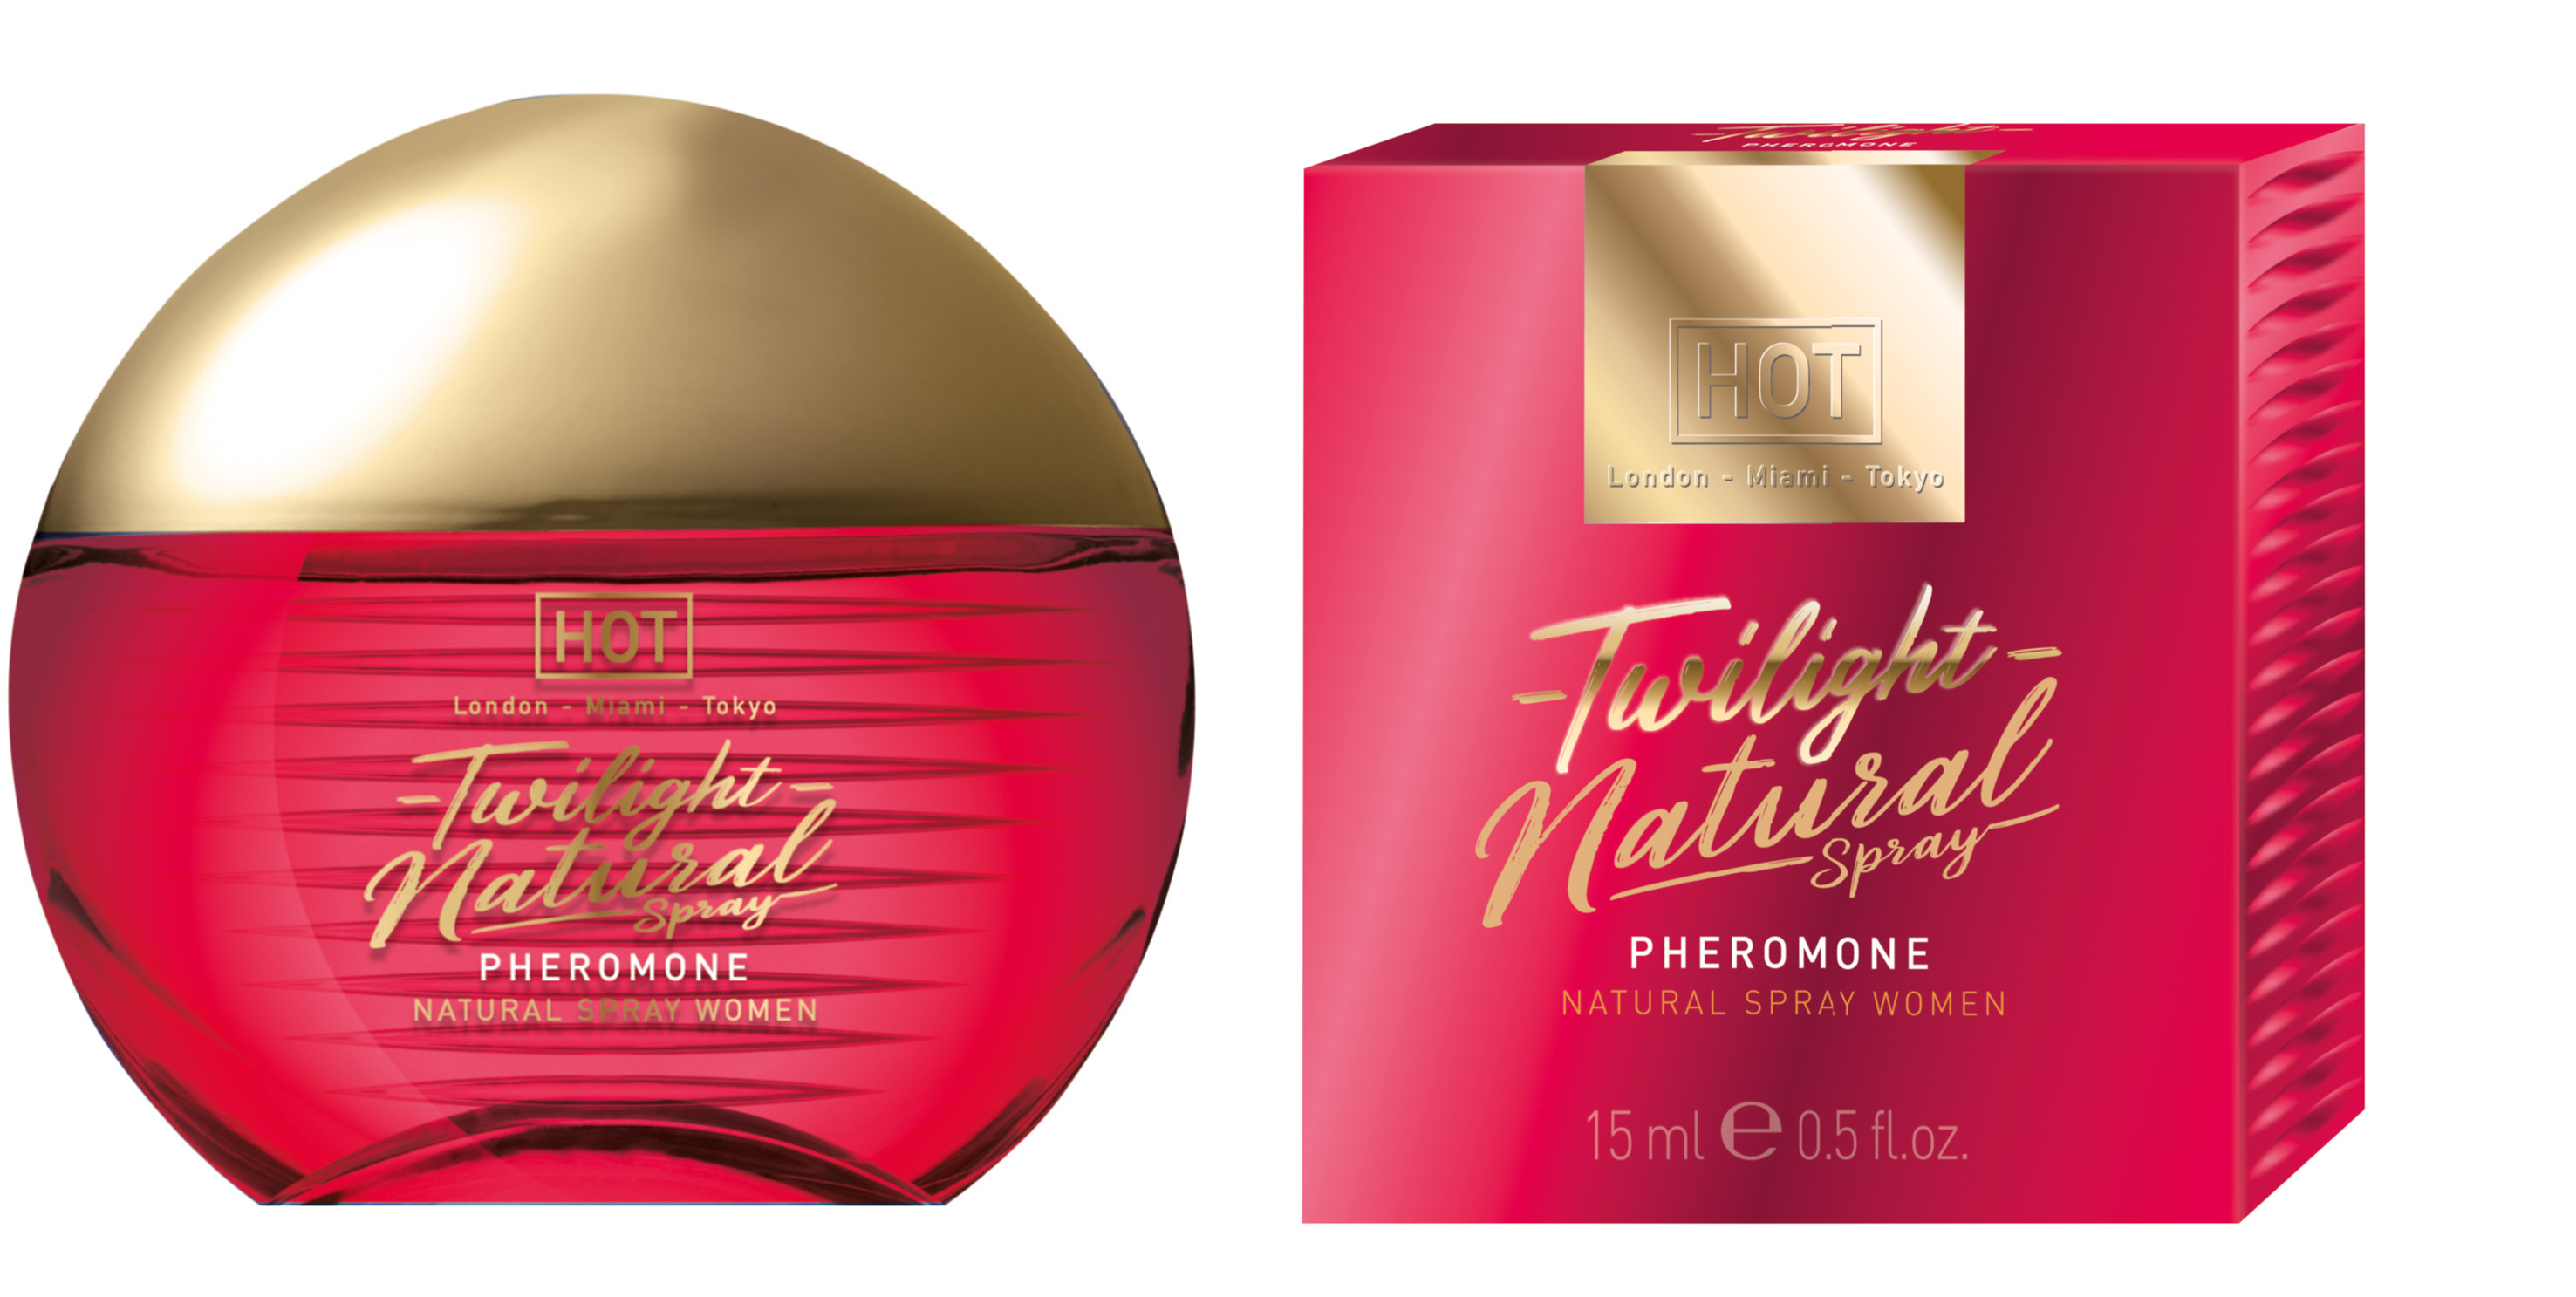 HOT Twilight Pheromone Natural Spray women15ml